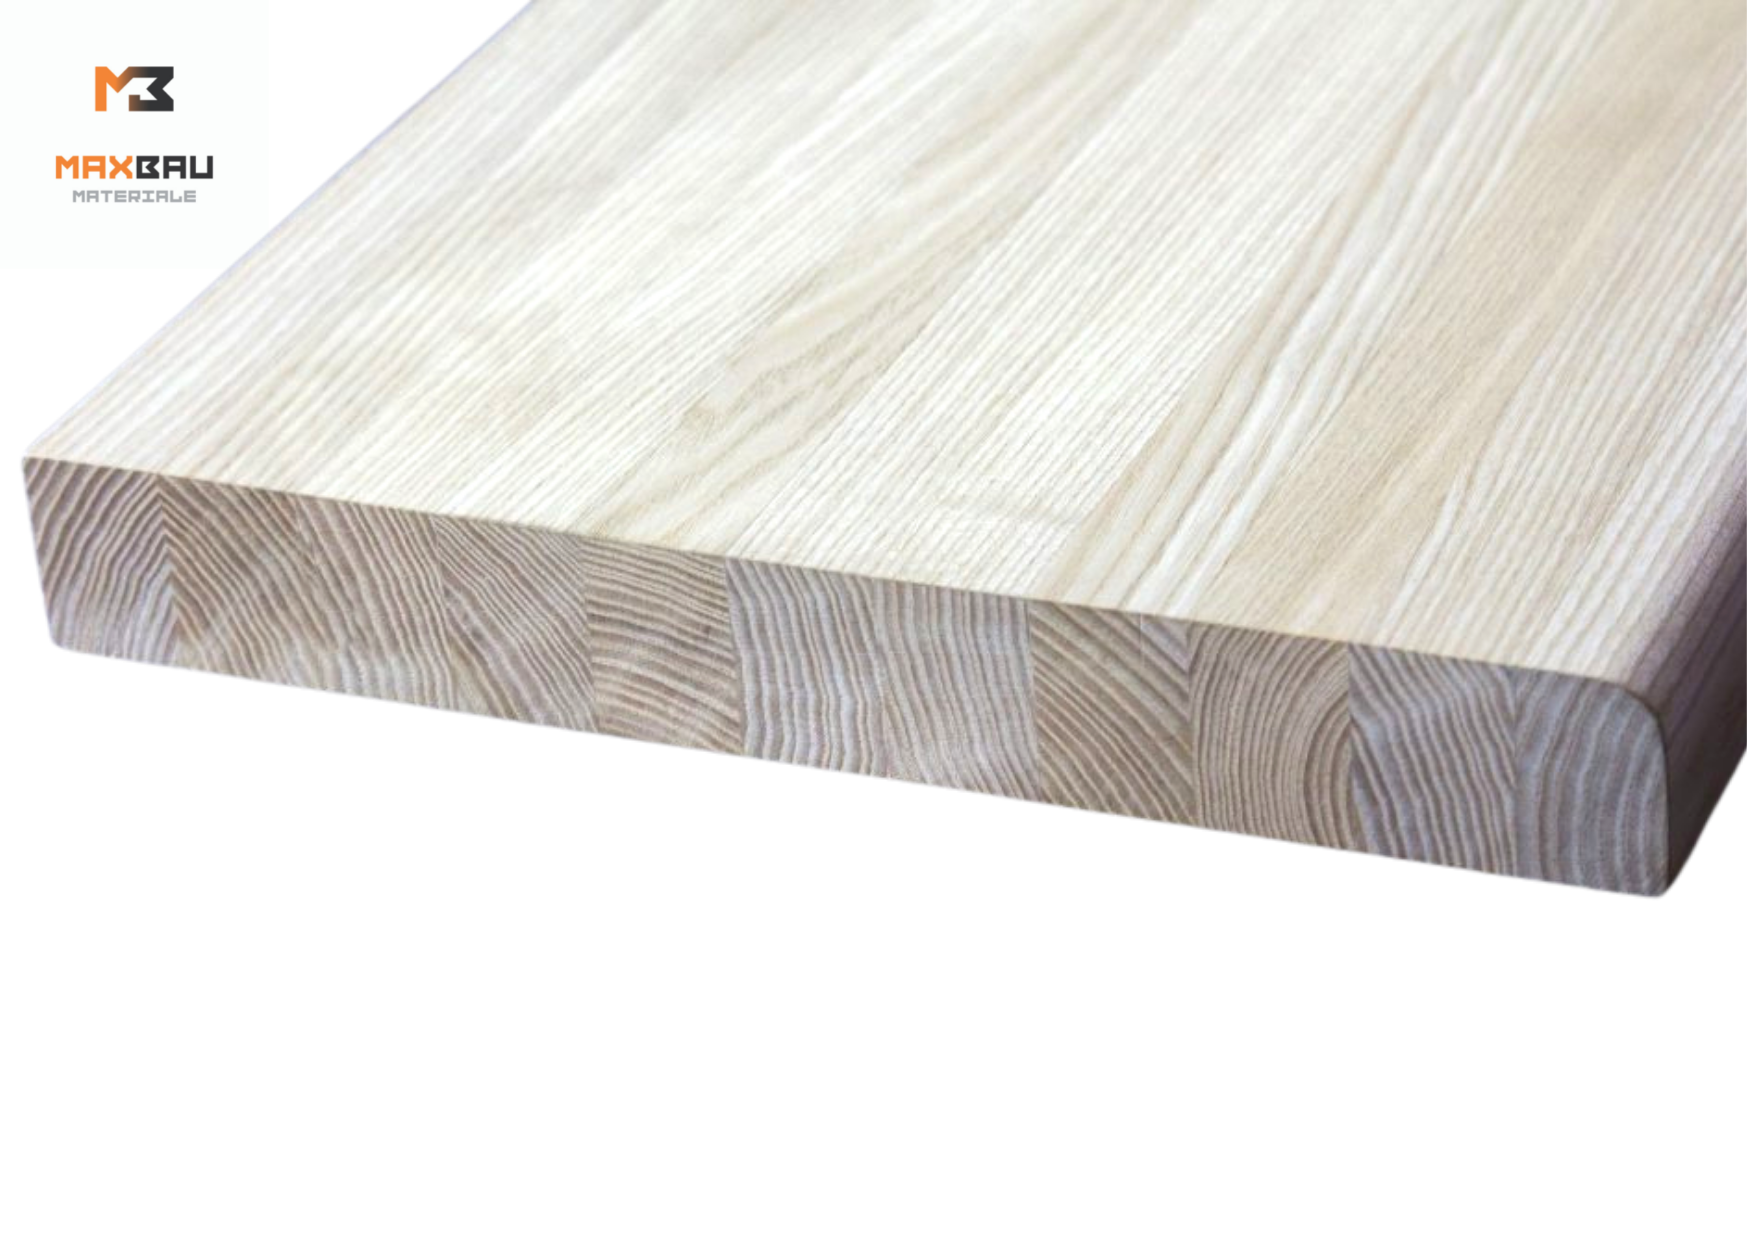 Plates of glued wood - MaxBau wooden plate glued 2500 x 250 x 28 mm class AB, https:maxbau.ro